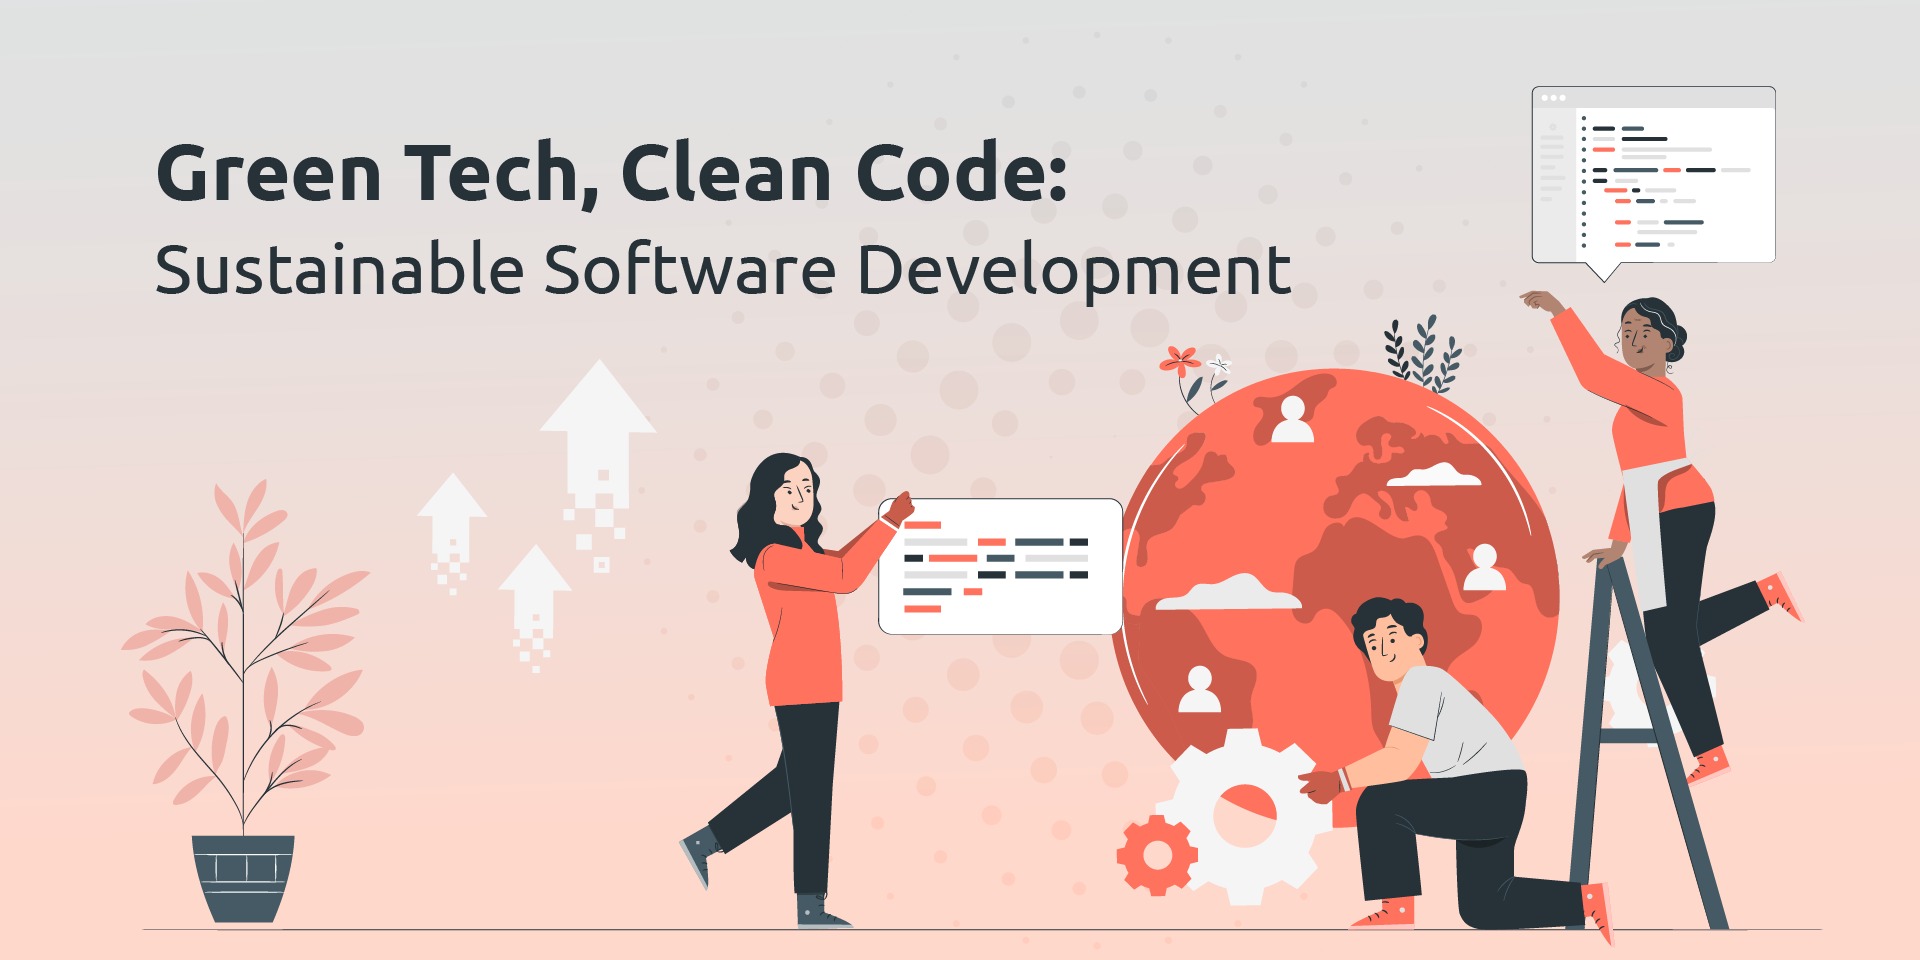 Green Tech, Clean Code: Sustainable Software Development